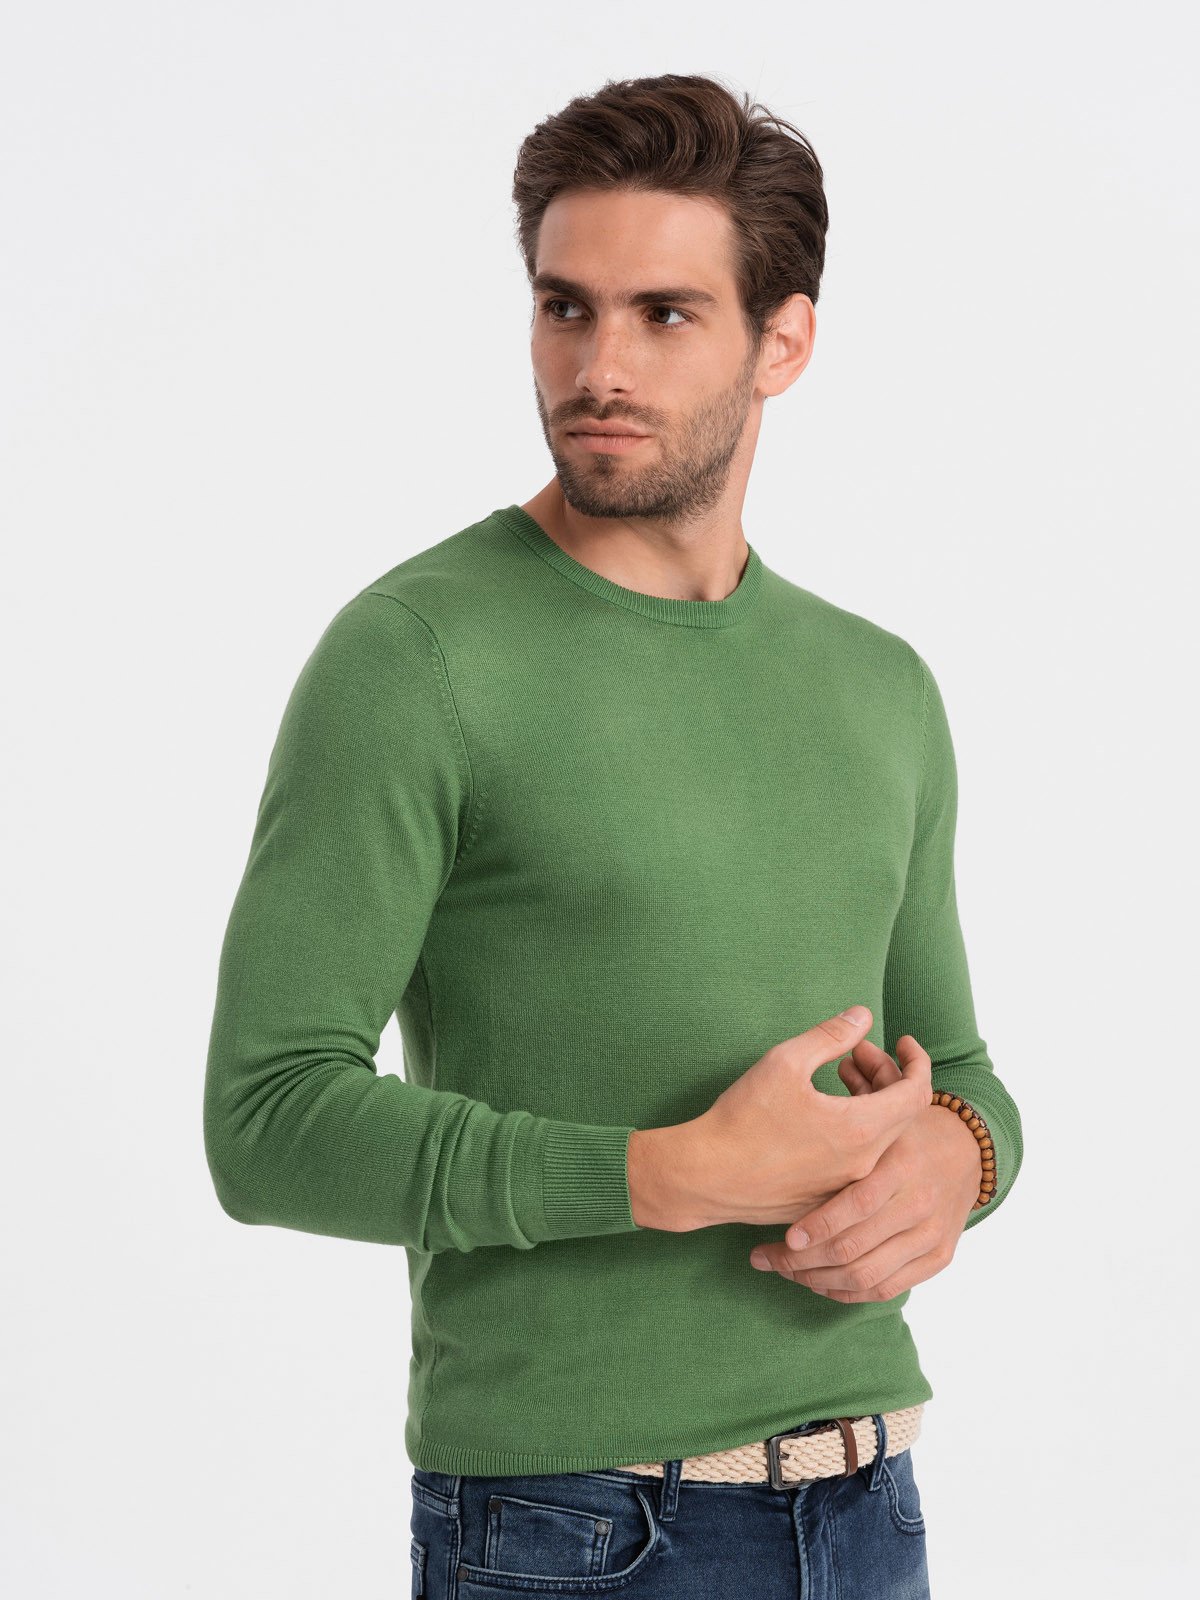 Classic men's sweater with round neckline - green V13 OM-SWBS V13 OM-SWBS - 0106